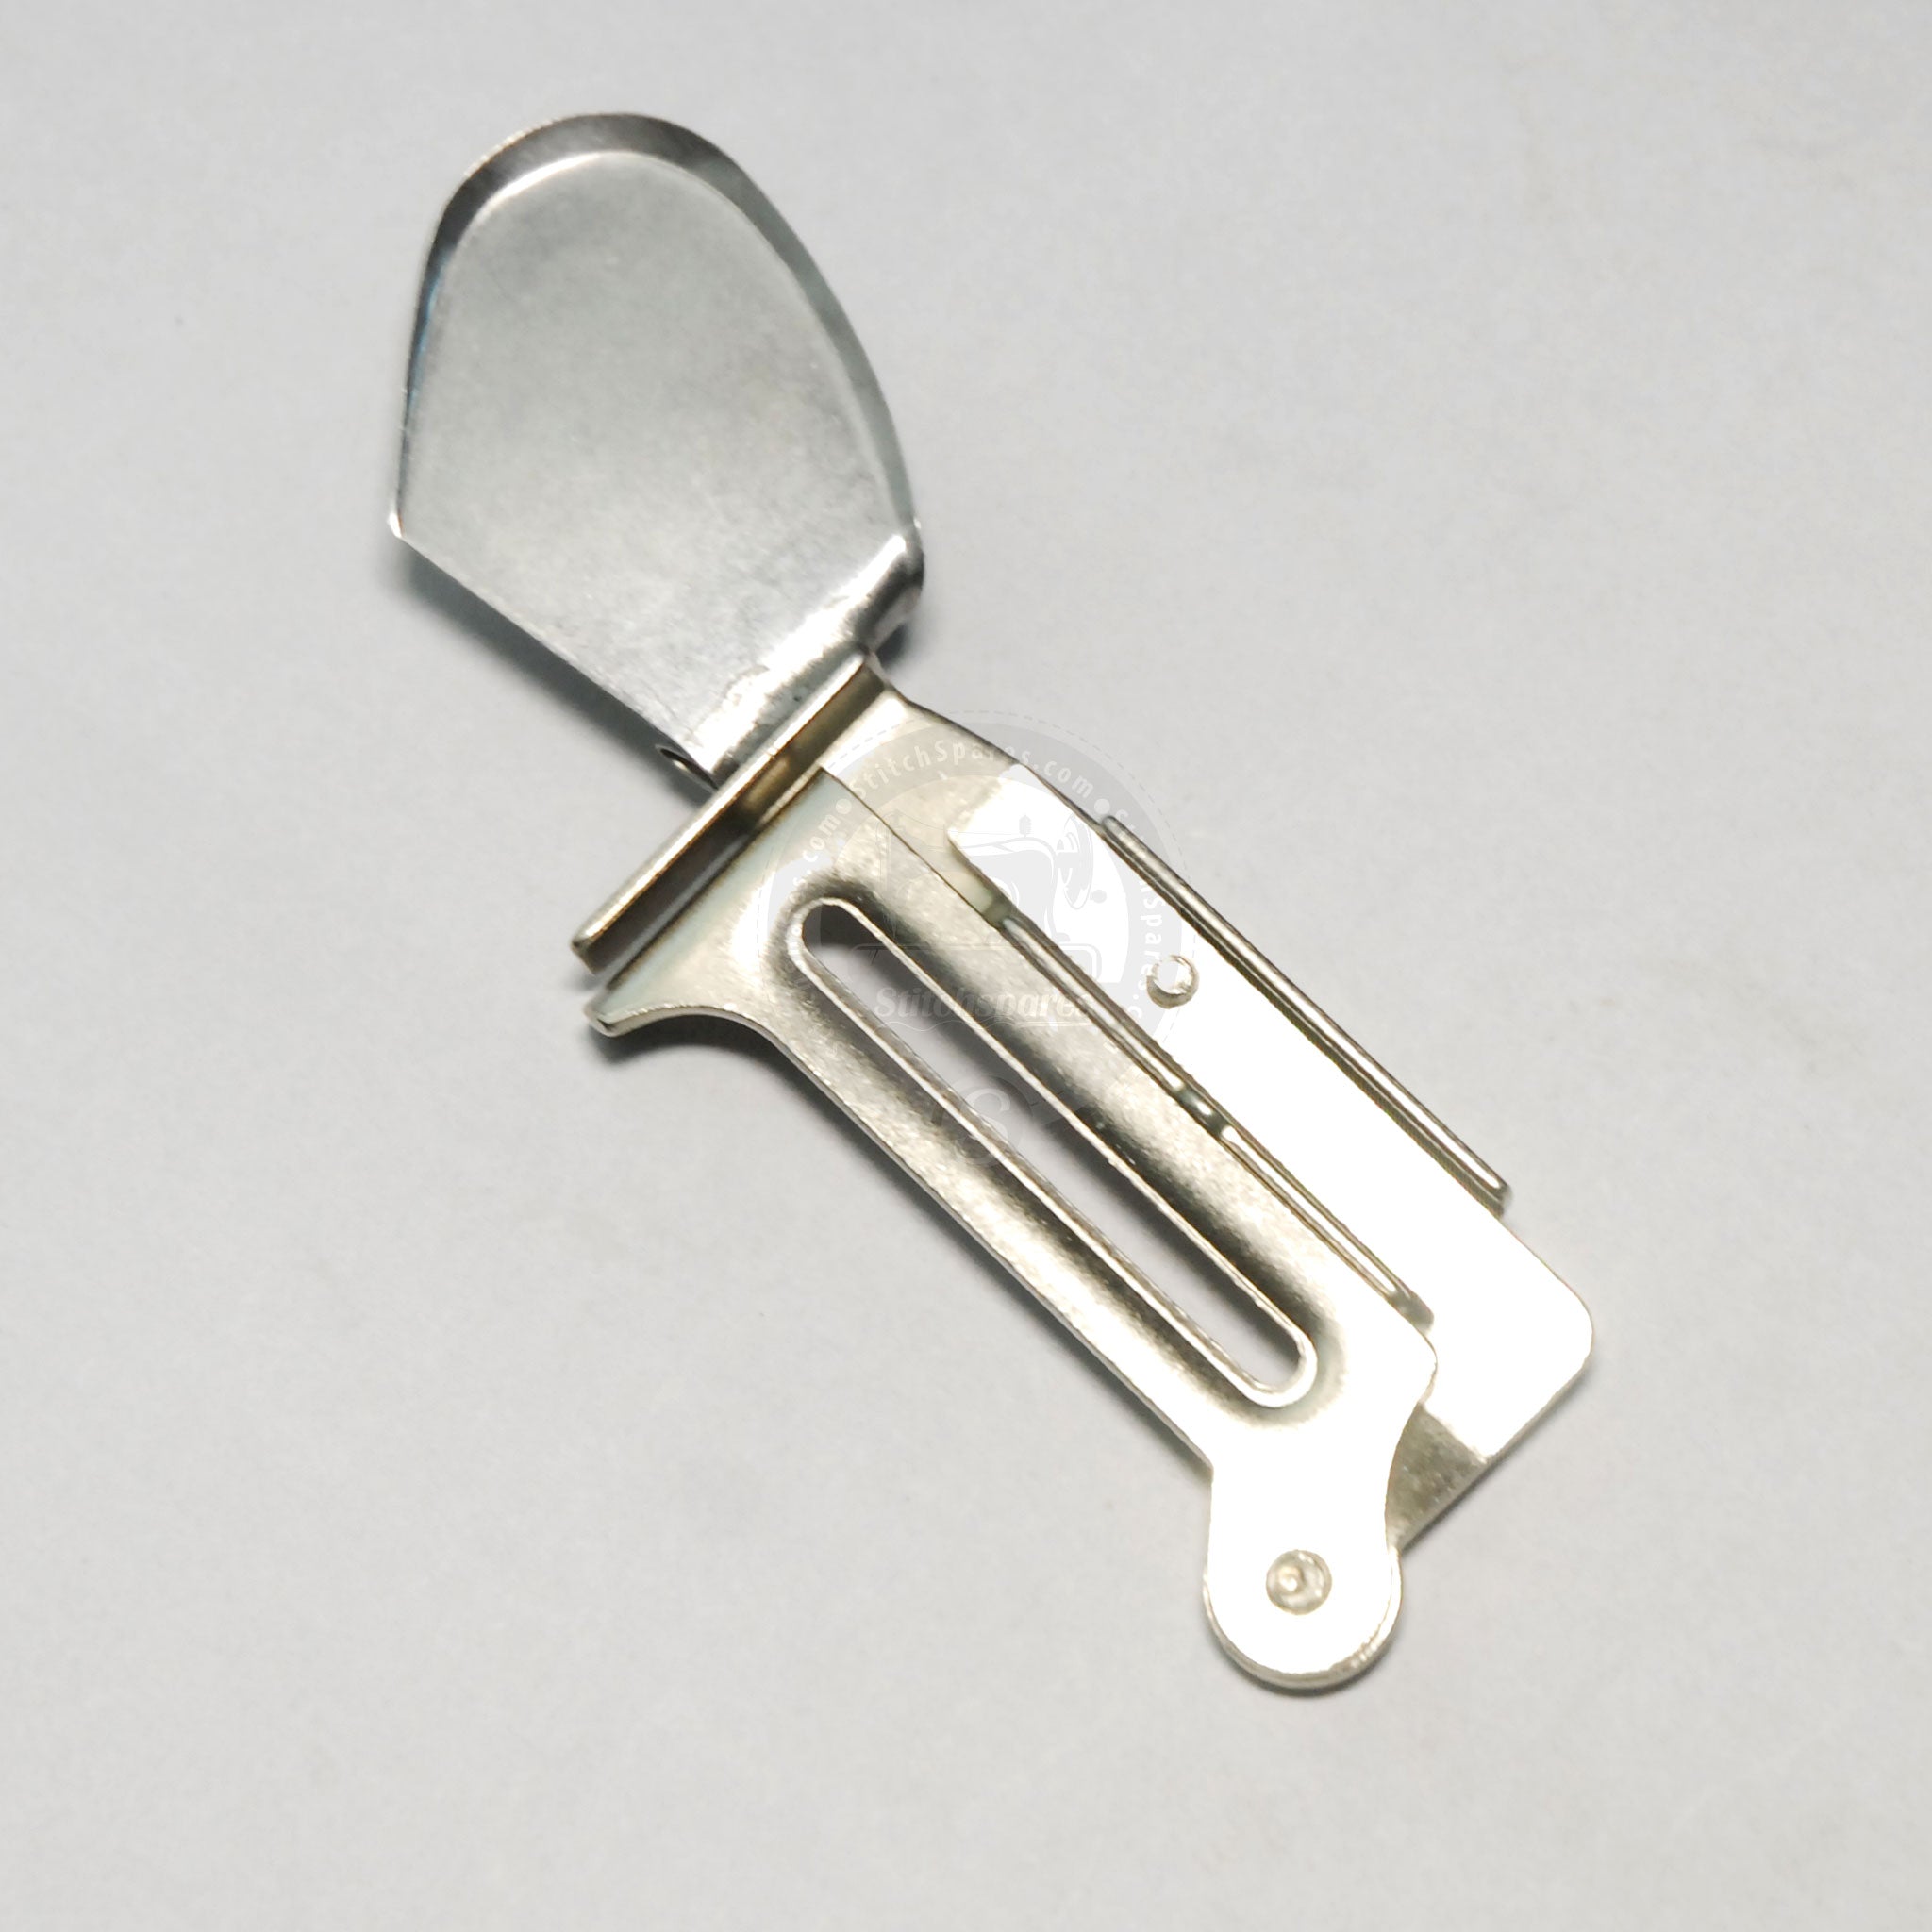 # Dayu A11 S72L 14 (6 mm) Swing Hemmer Folder Binder Single Needle Machine